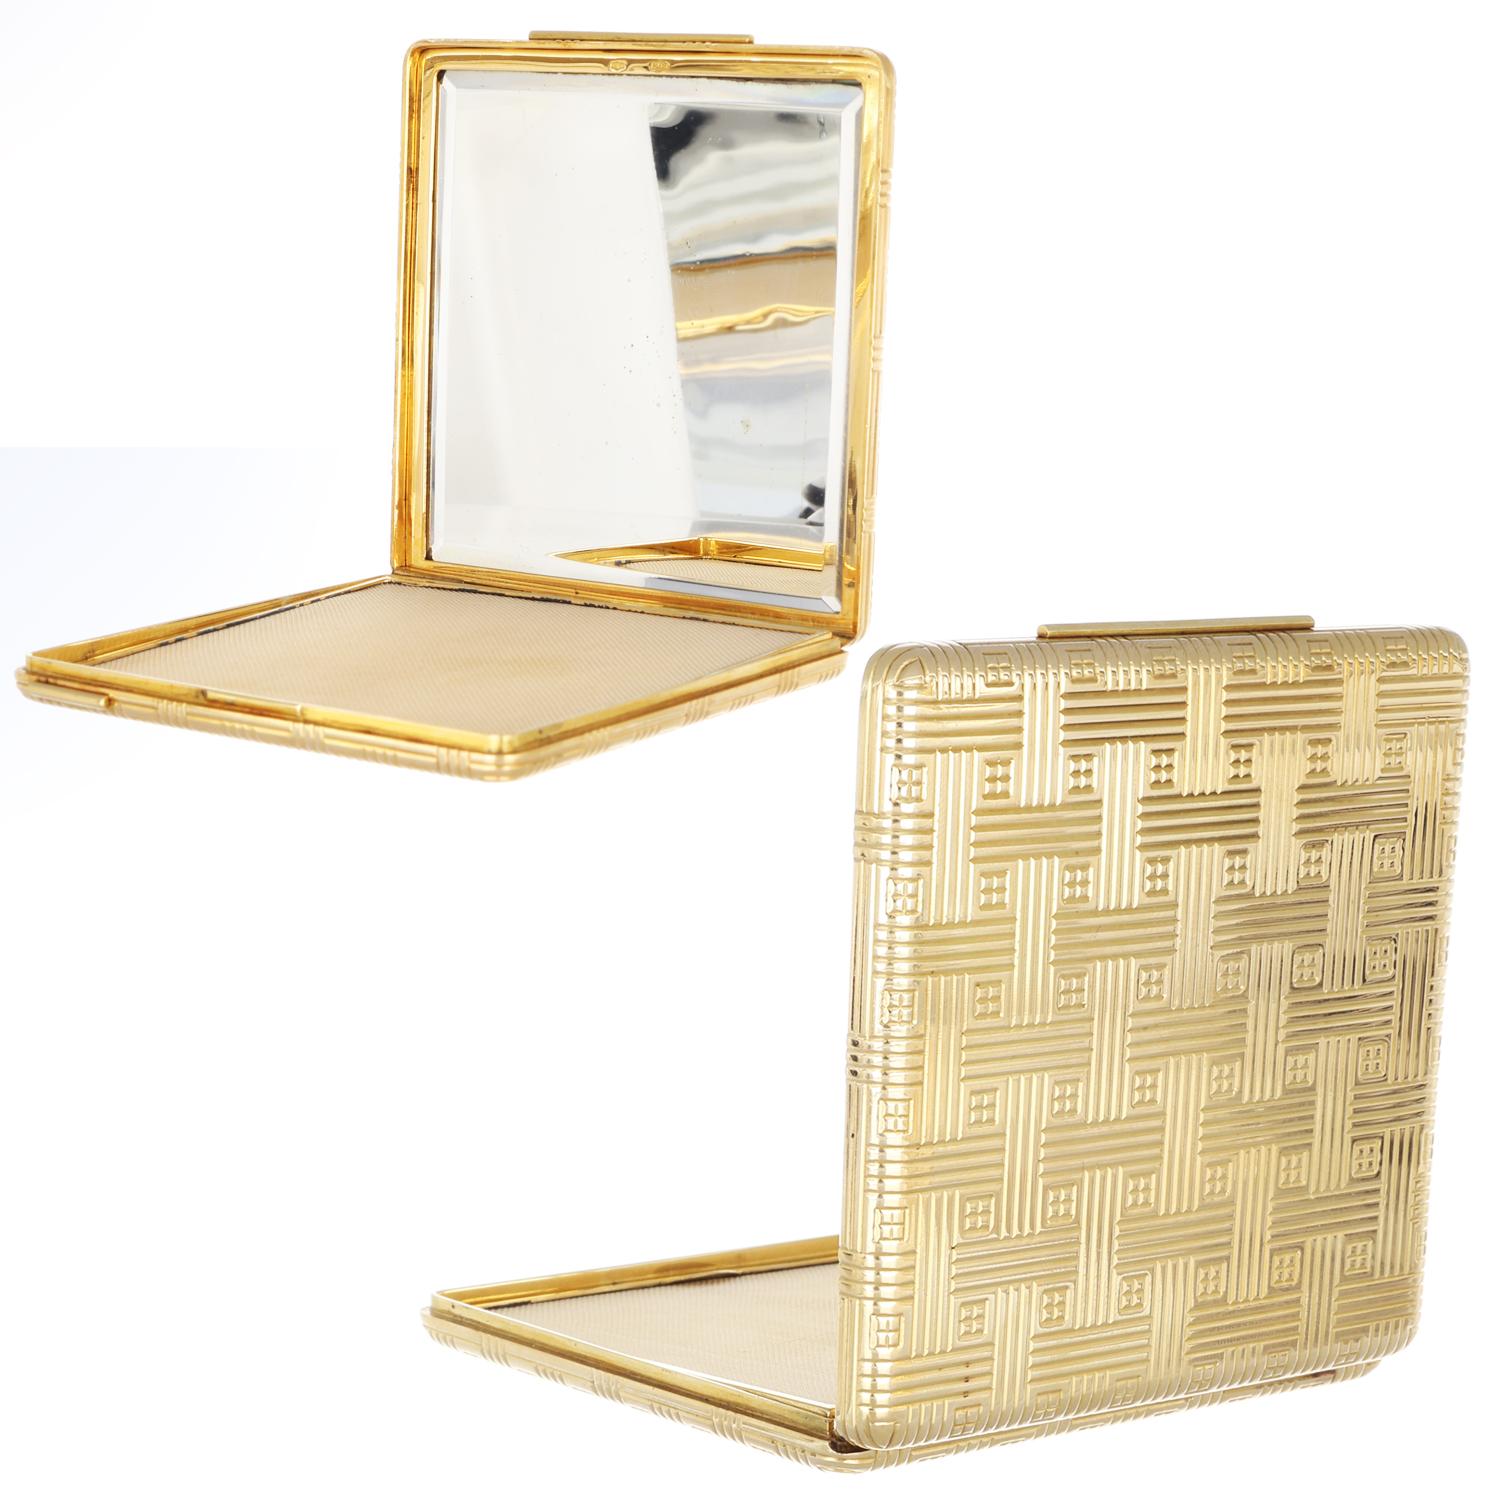 18Kt Gold Seltene kompakte Puderdose - Made in Italy 1970 circa - Geometrisches Muster im Angebot 8